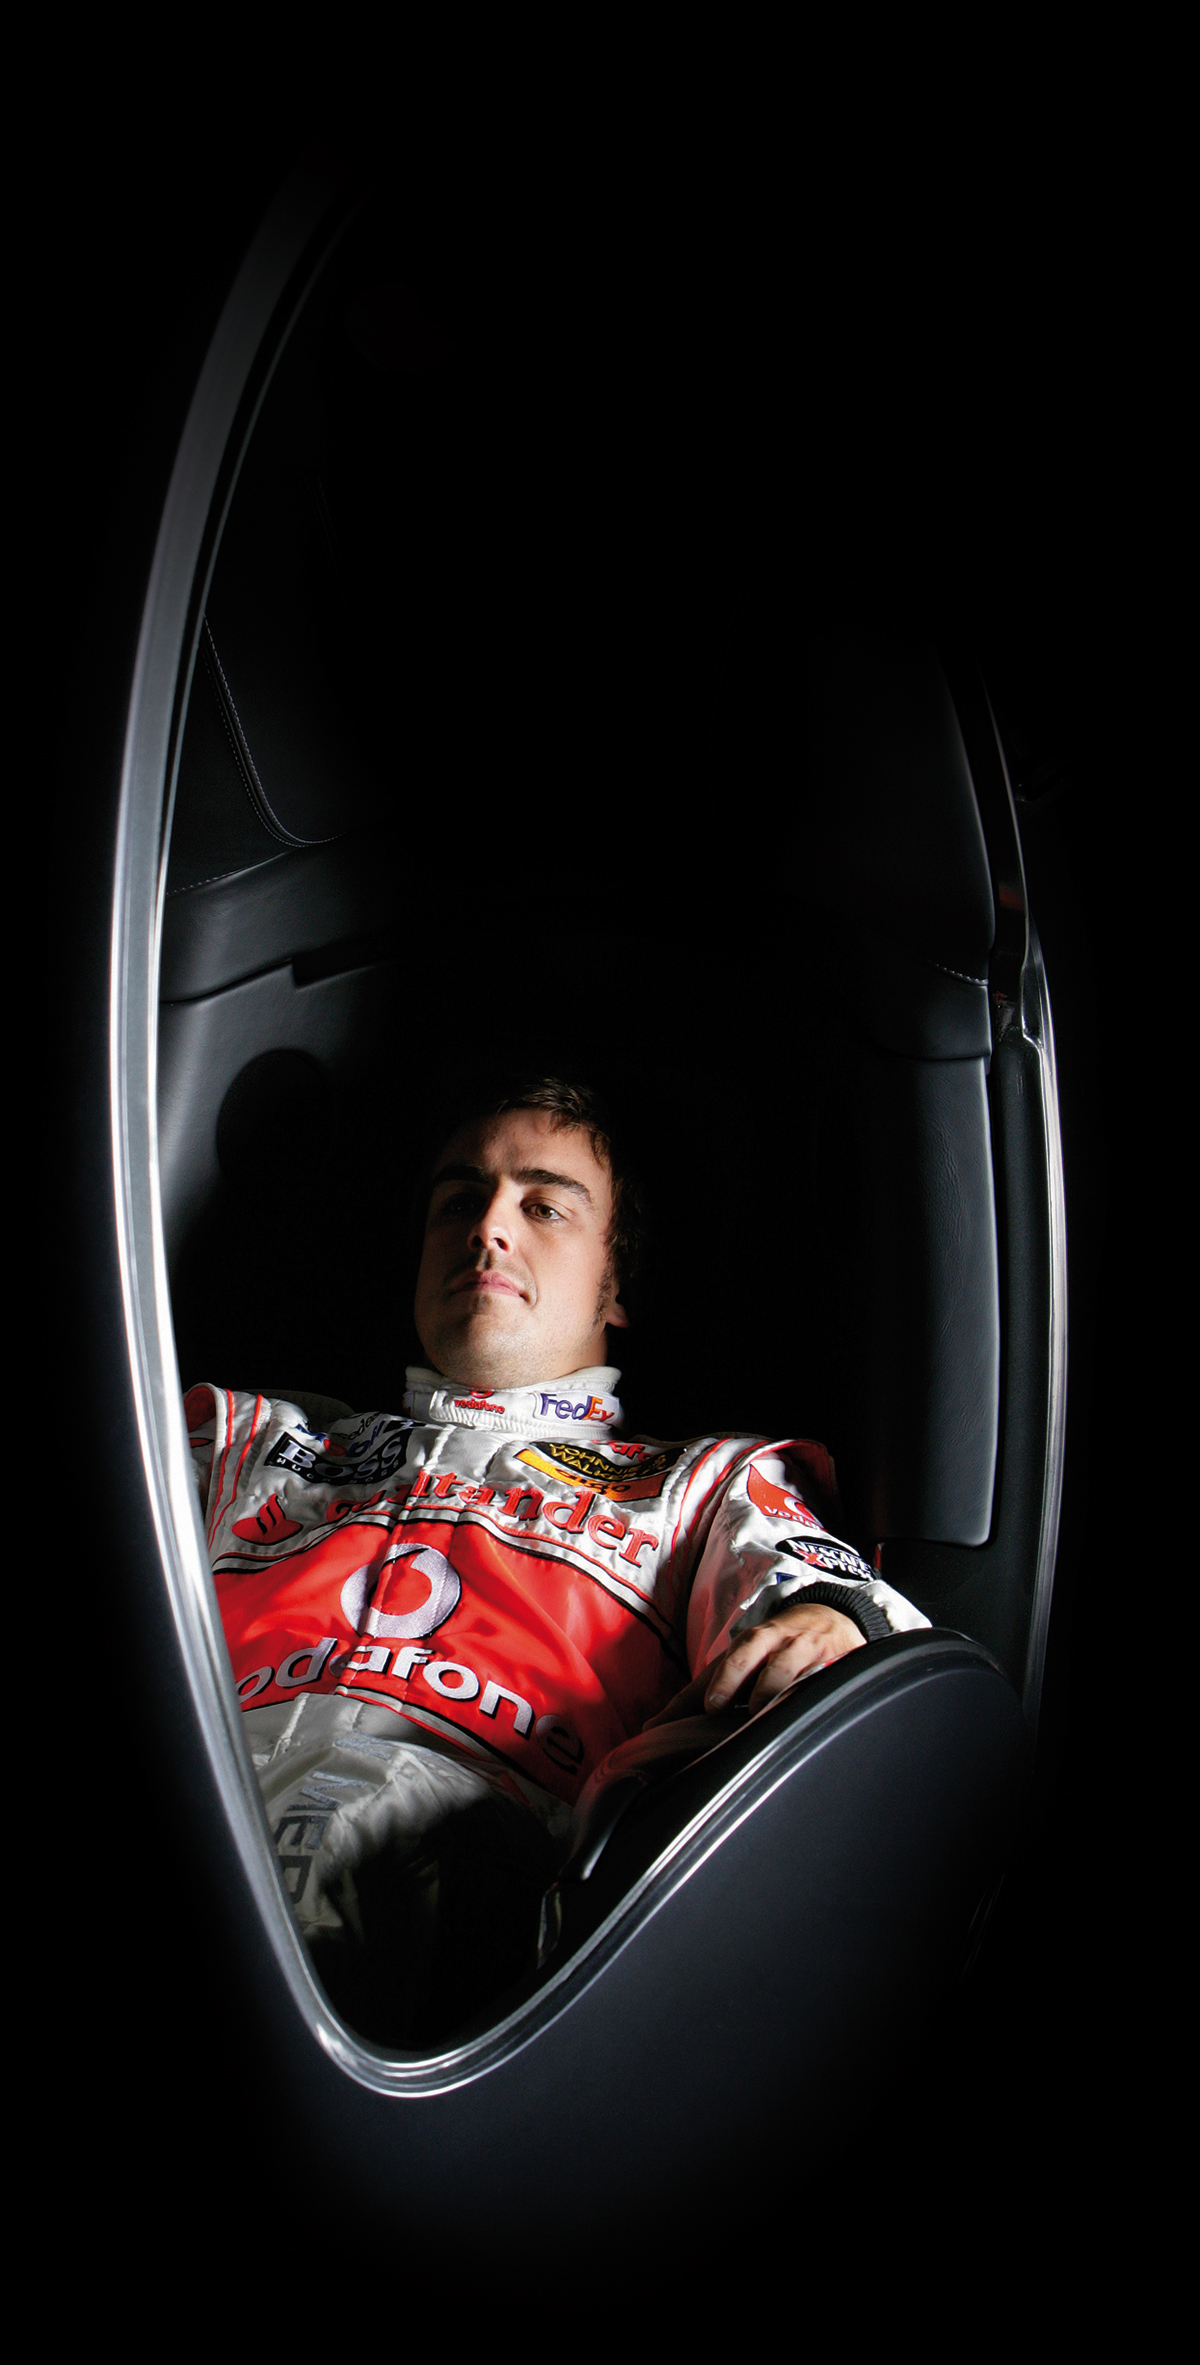 Racing simulation product f1 McLaren immersive Driving